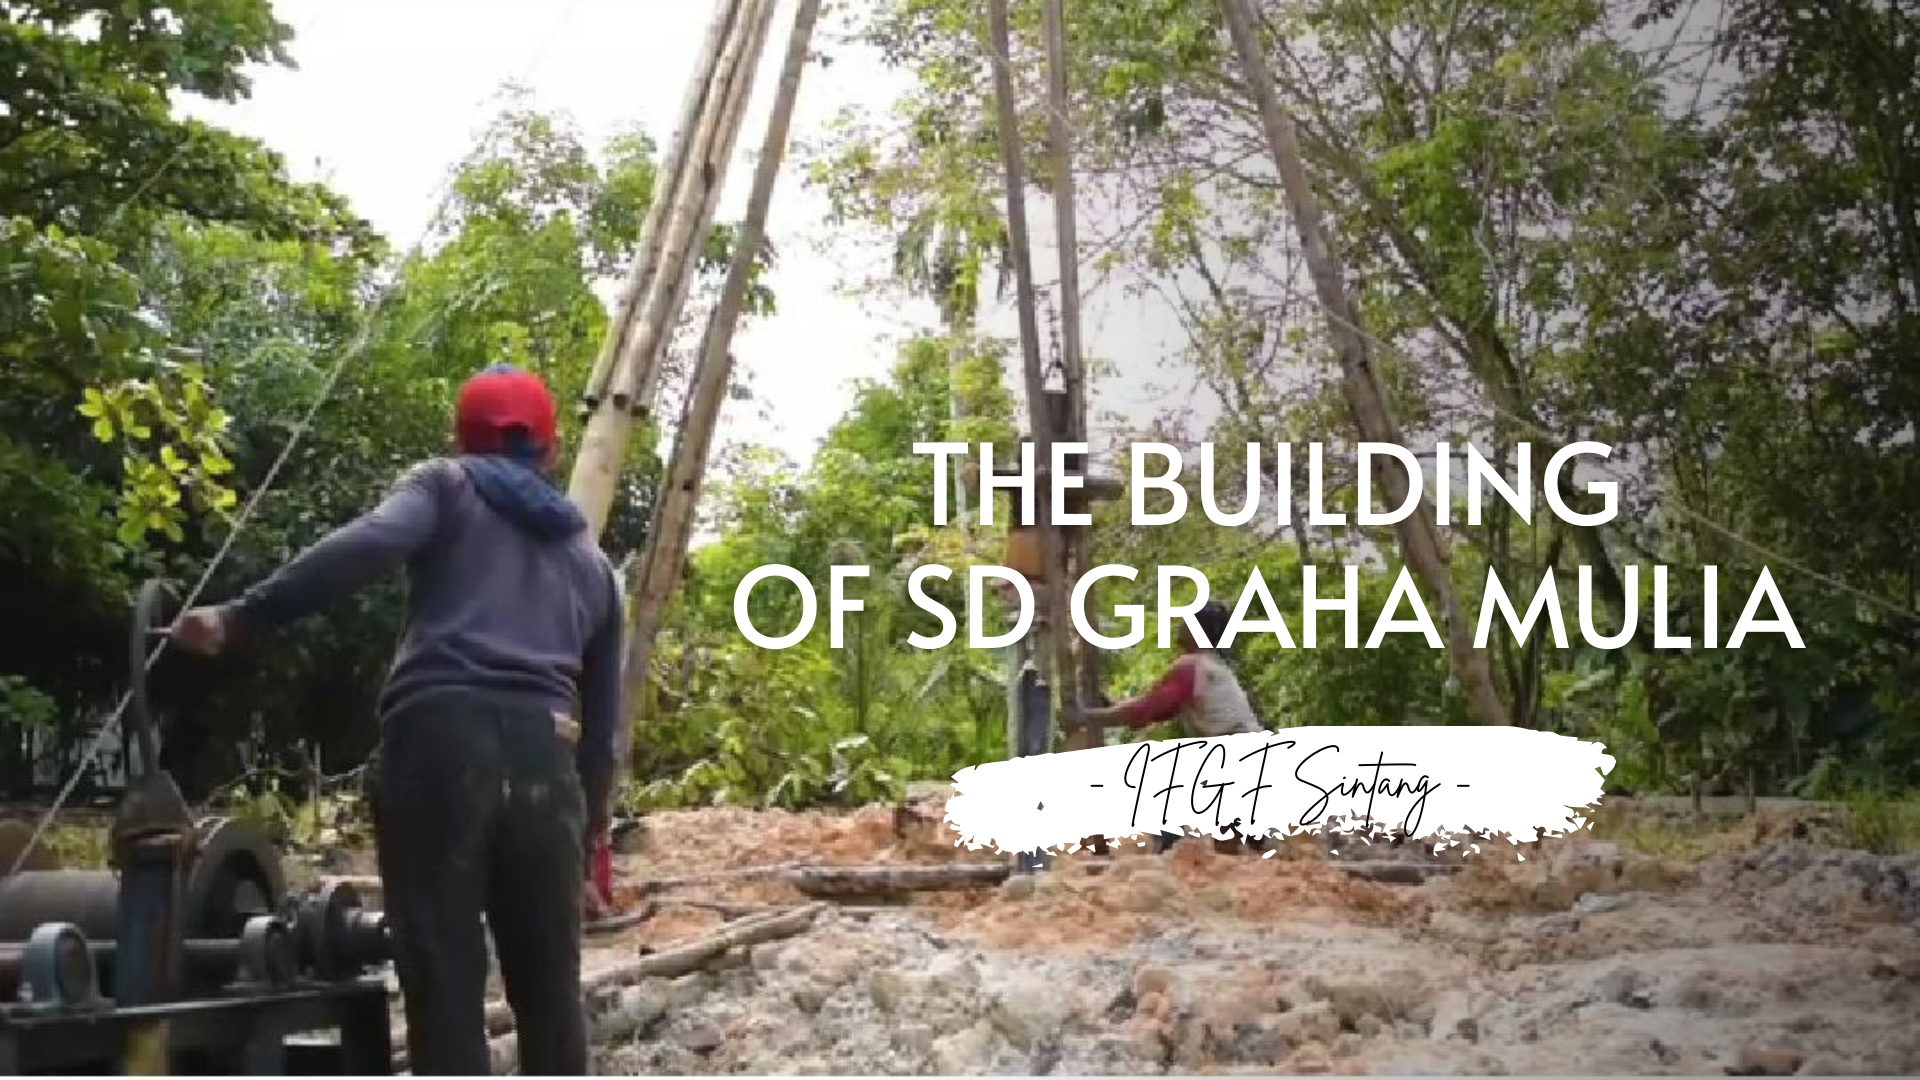 The Building of SD Graha Mulia (Graha Mulia Elementary School)